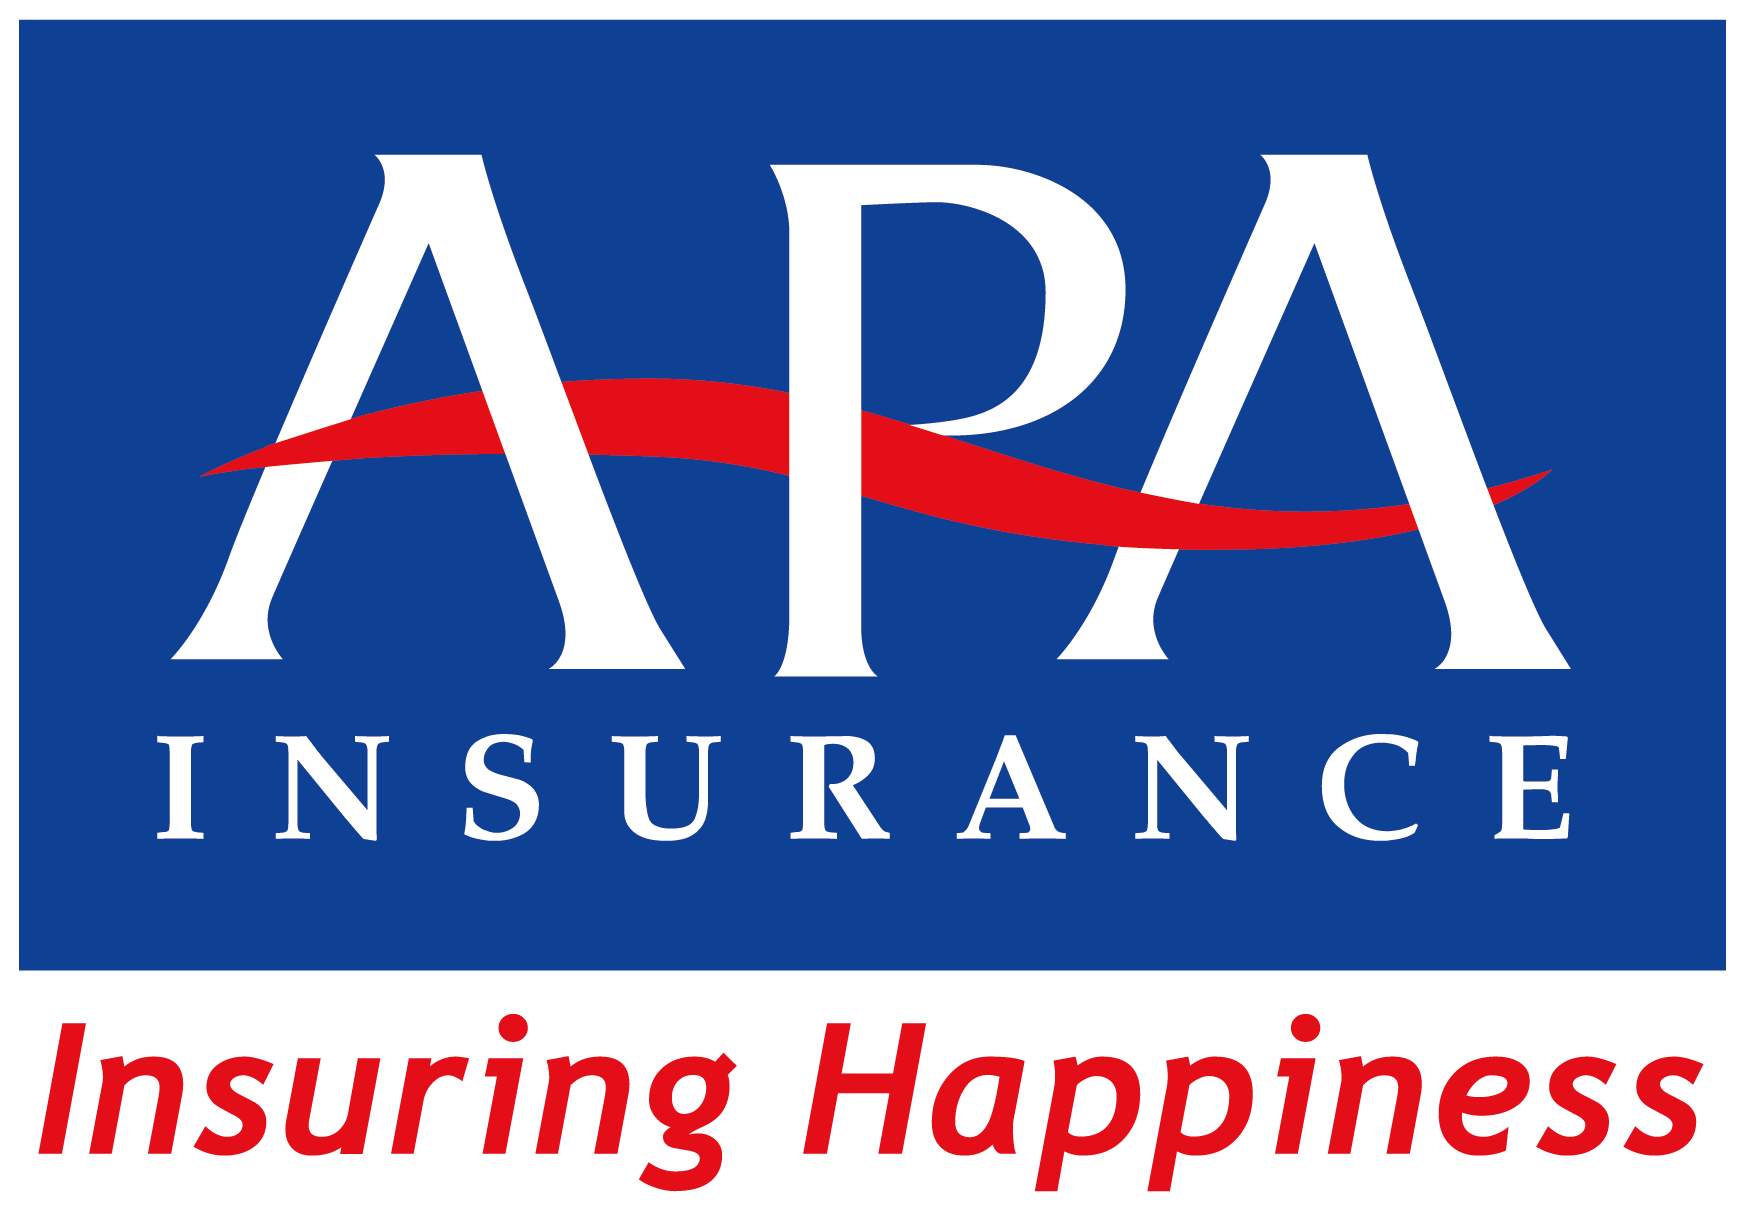 APA Insurance